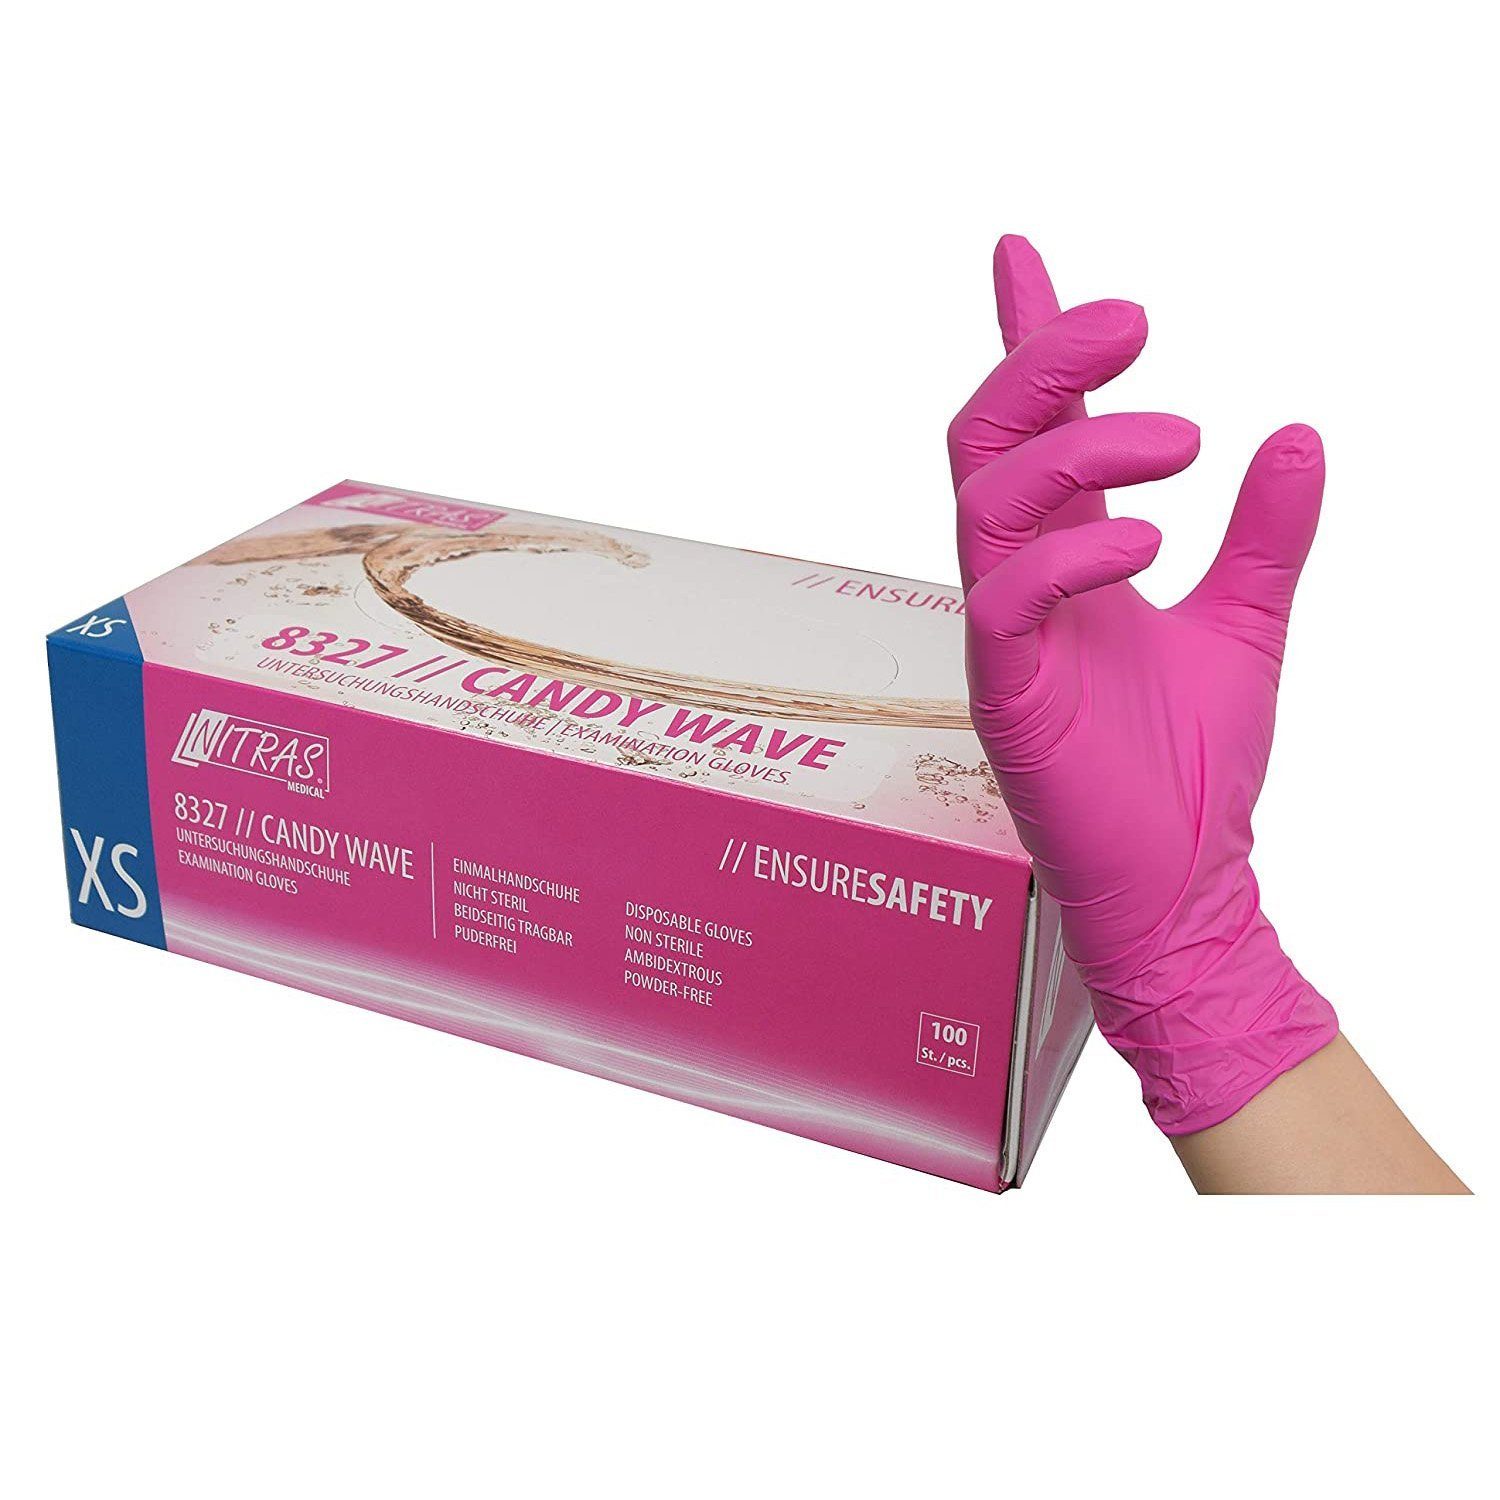 Nitras Einweghandschuhe Candy – Wave pude Spender-Box in Nitril-Handschuhe